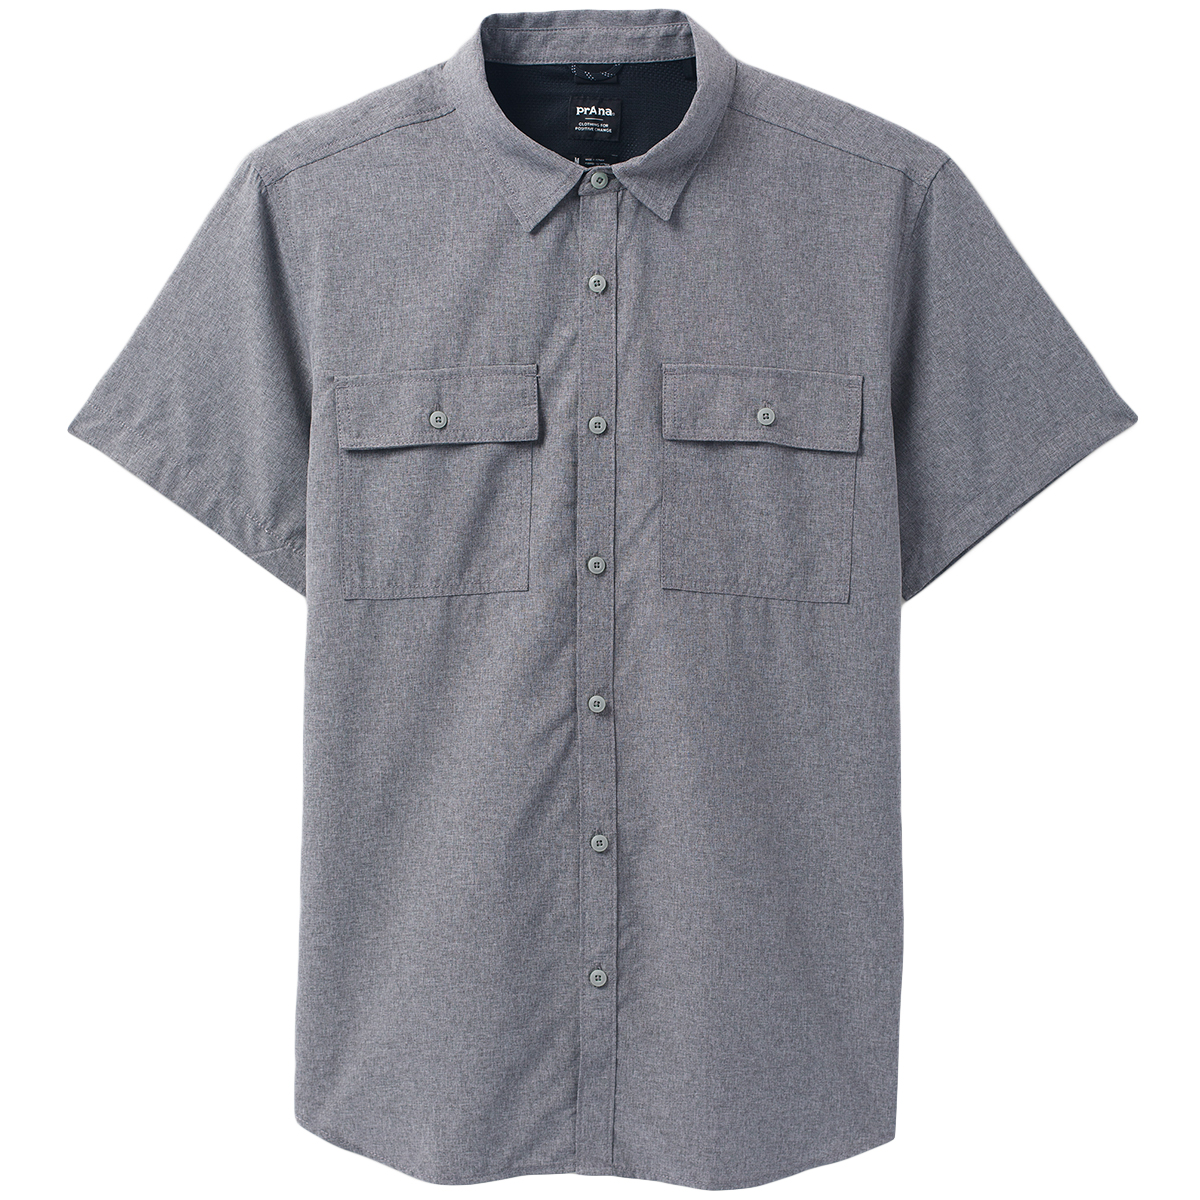 Prana Men's Lost Sol Short-Sleeve Shirt - Size XL